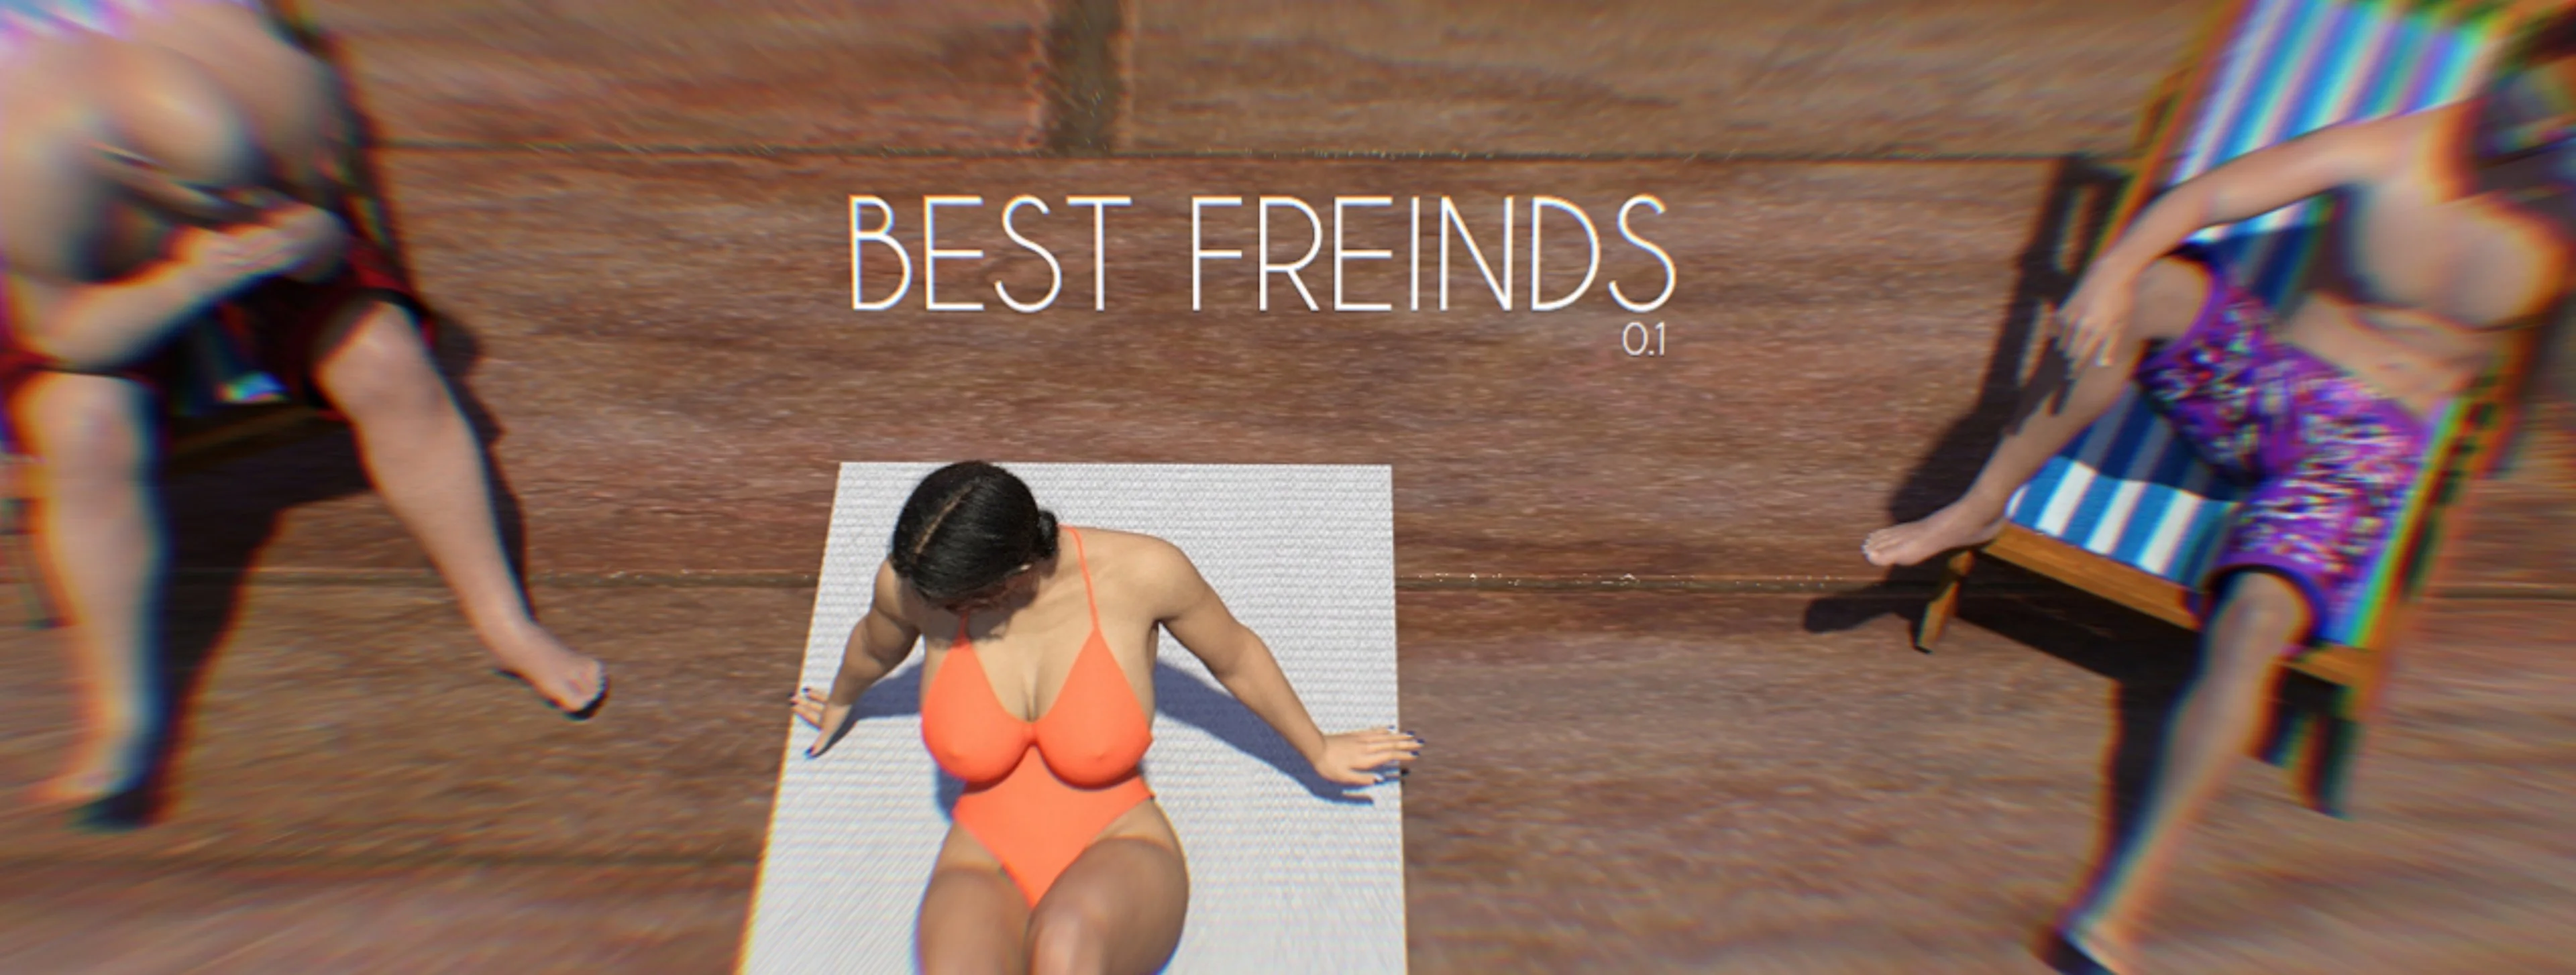 Best Friends [v0.1] main image